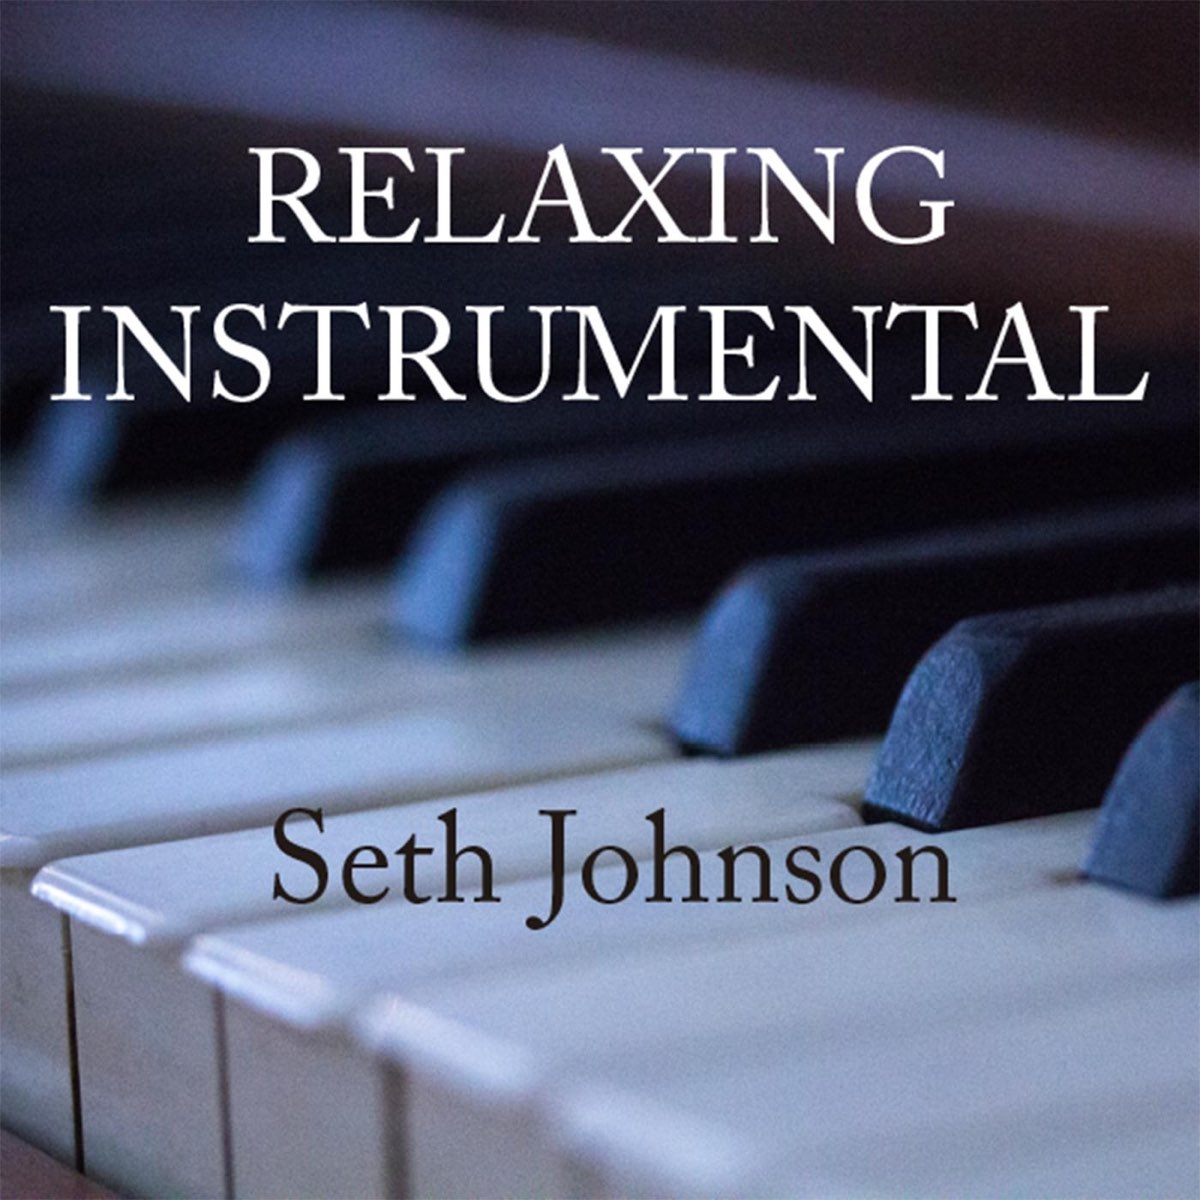 Relaxing instrumental music